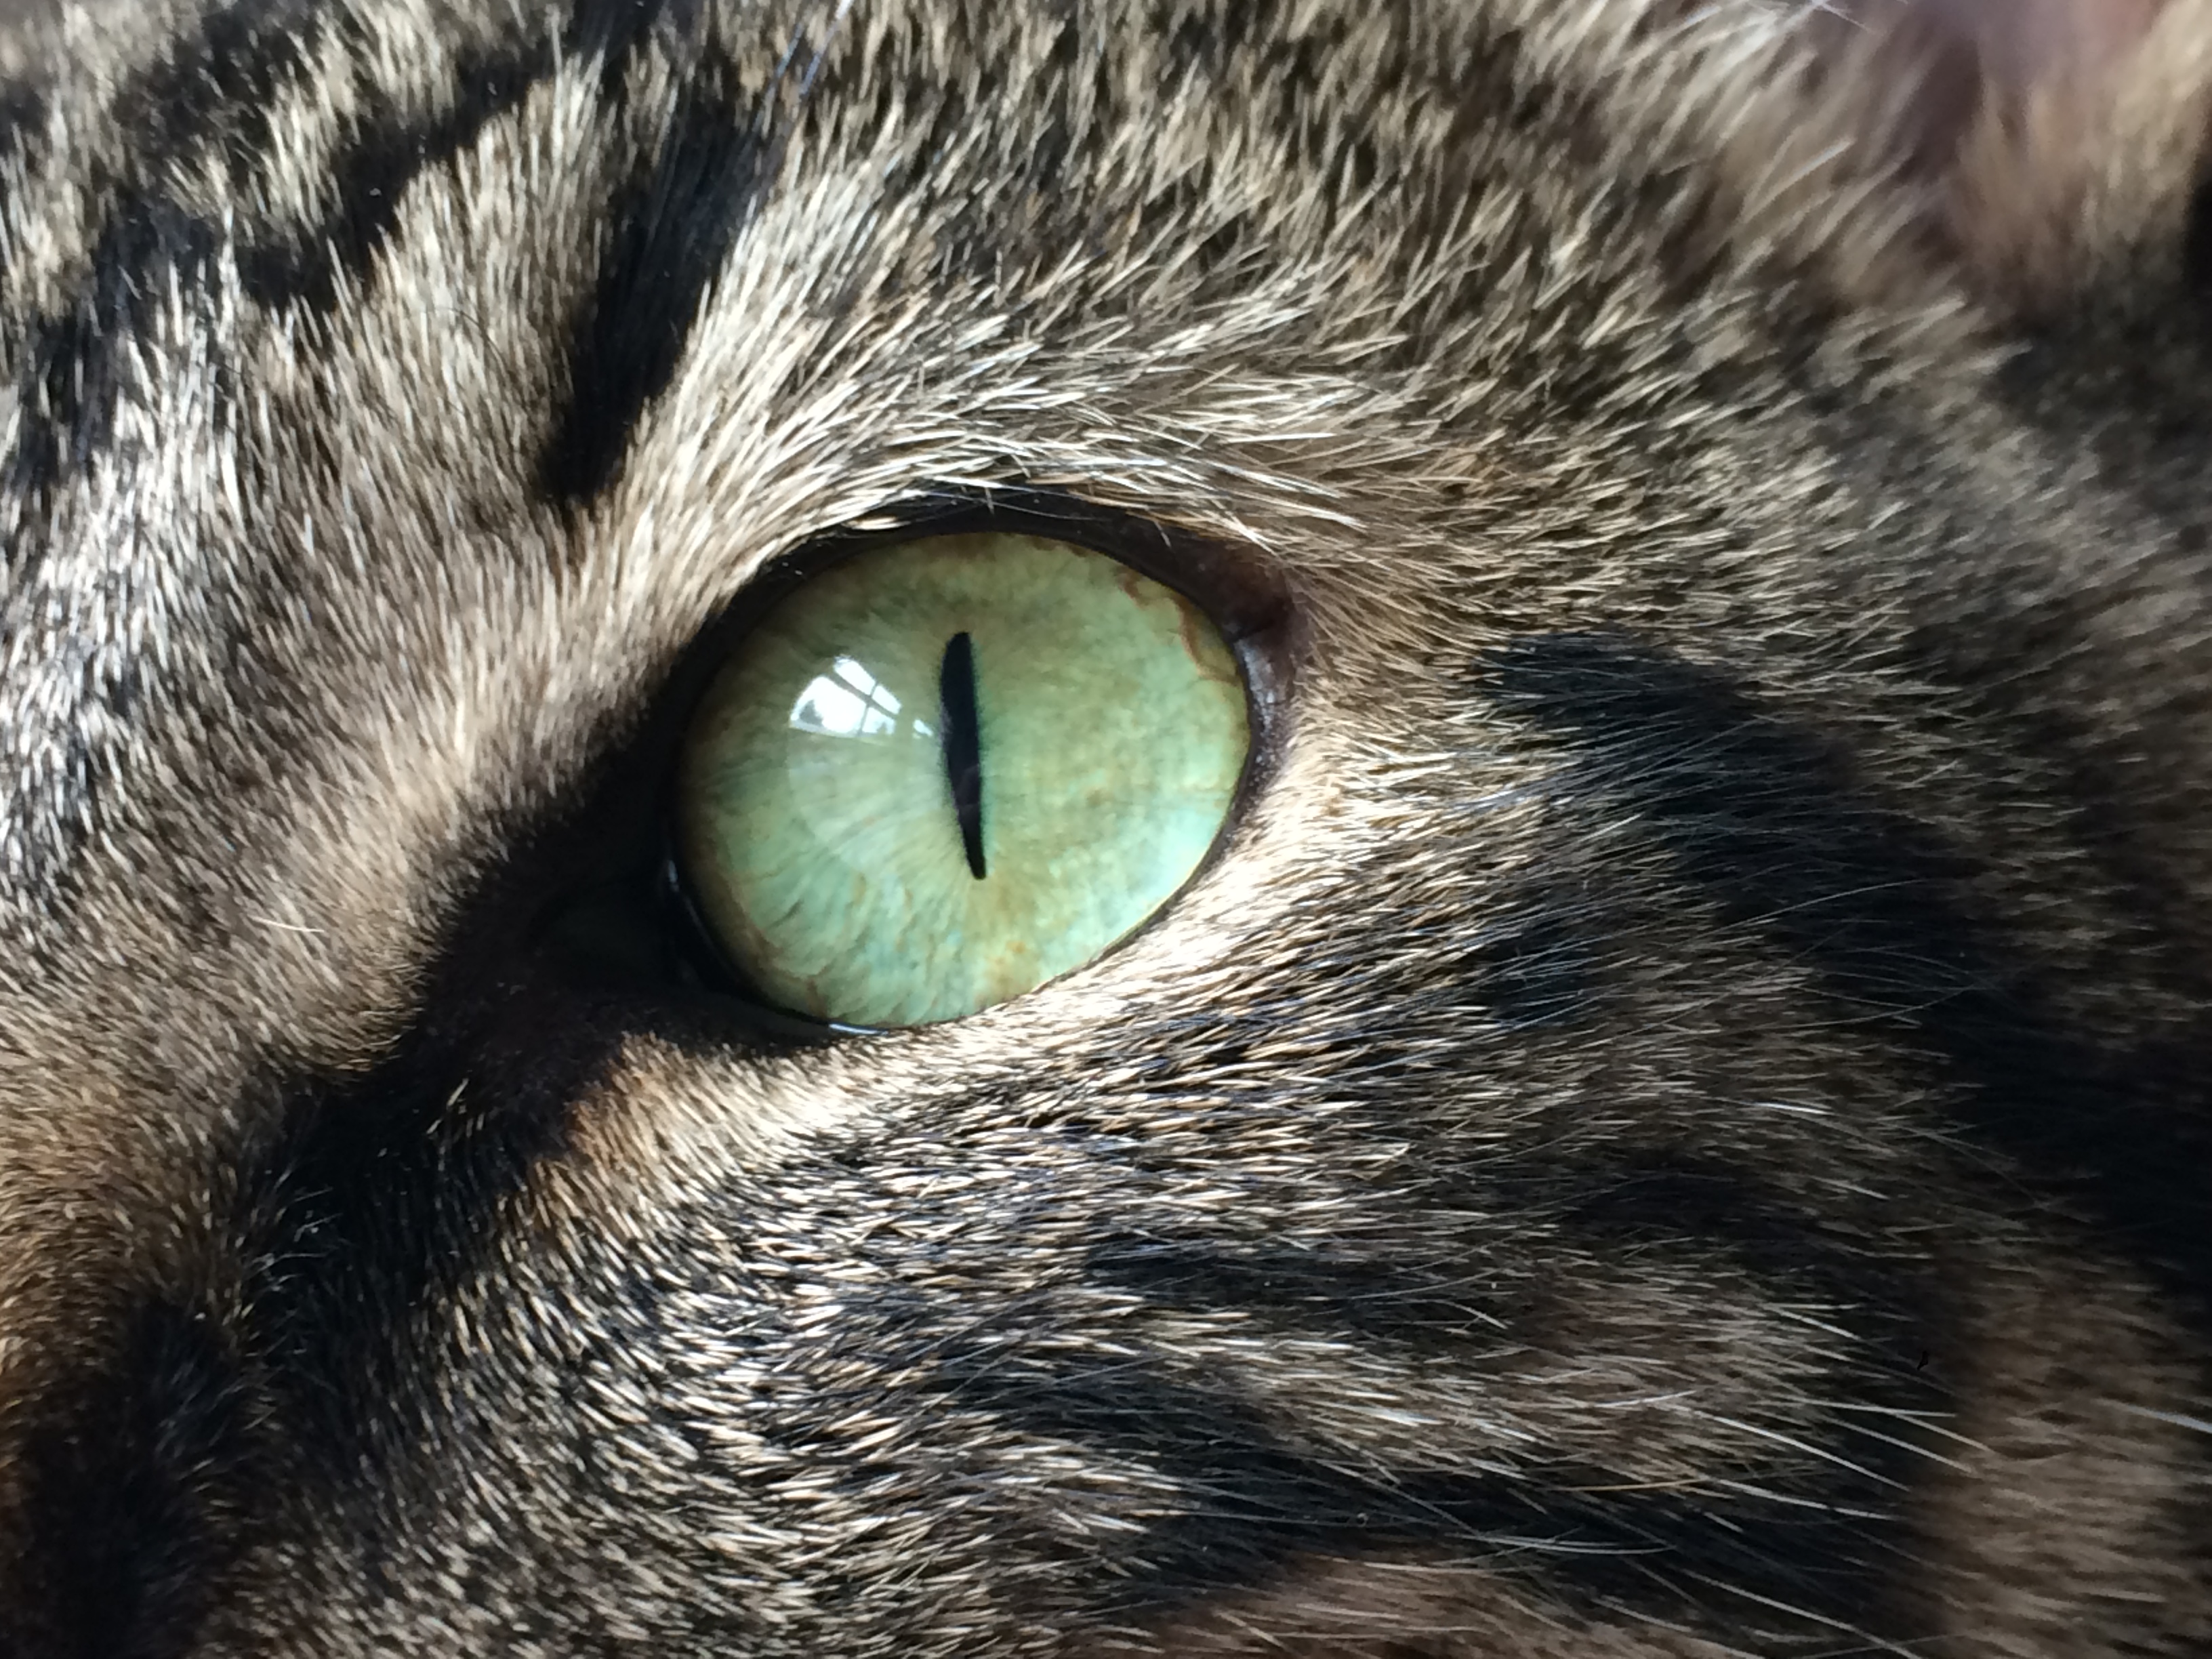 https://upload.wikimedia.org/wikipedia/commons/4/42/Cat%27s_Eye.jpg